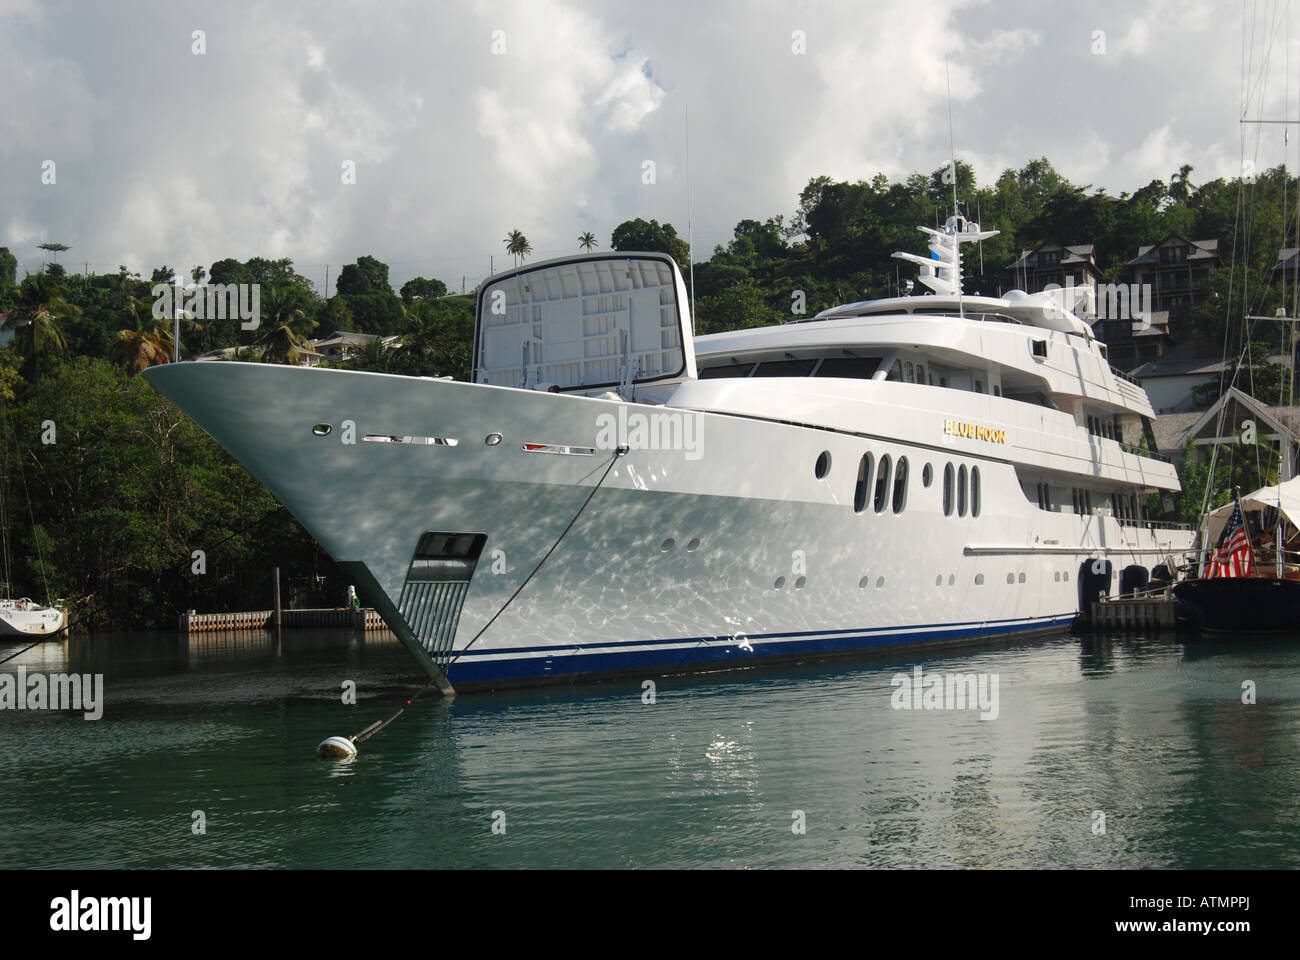 Bernard Arnault's luxury yacht Symphony moored in the gulf of St